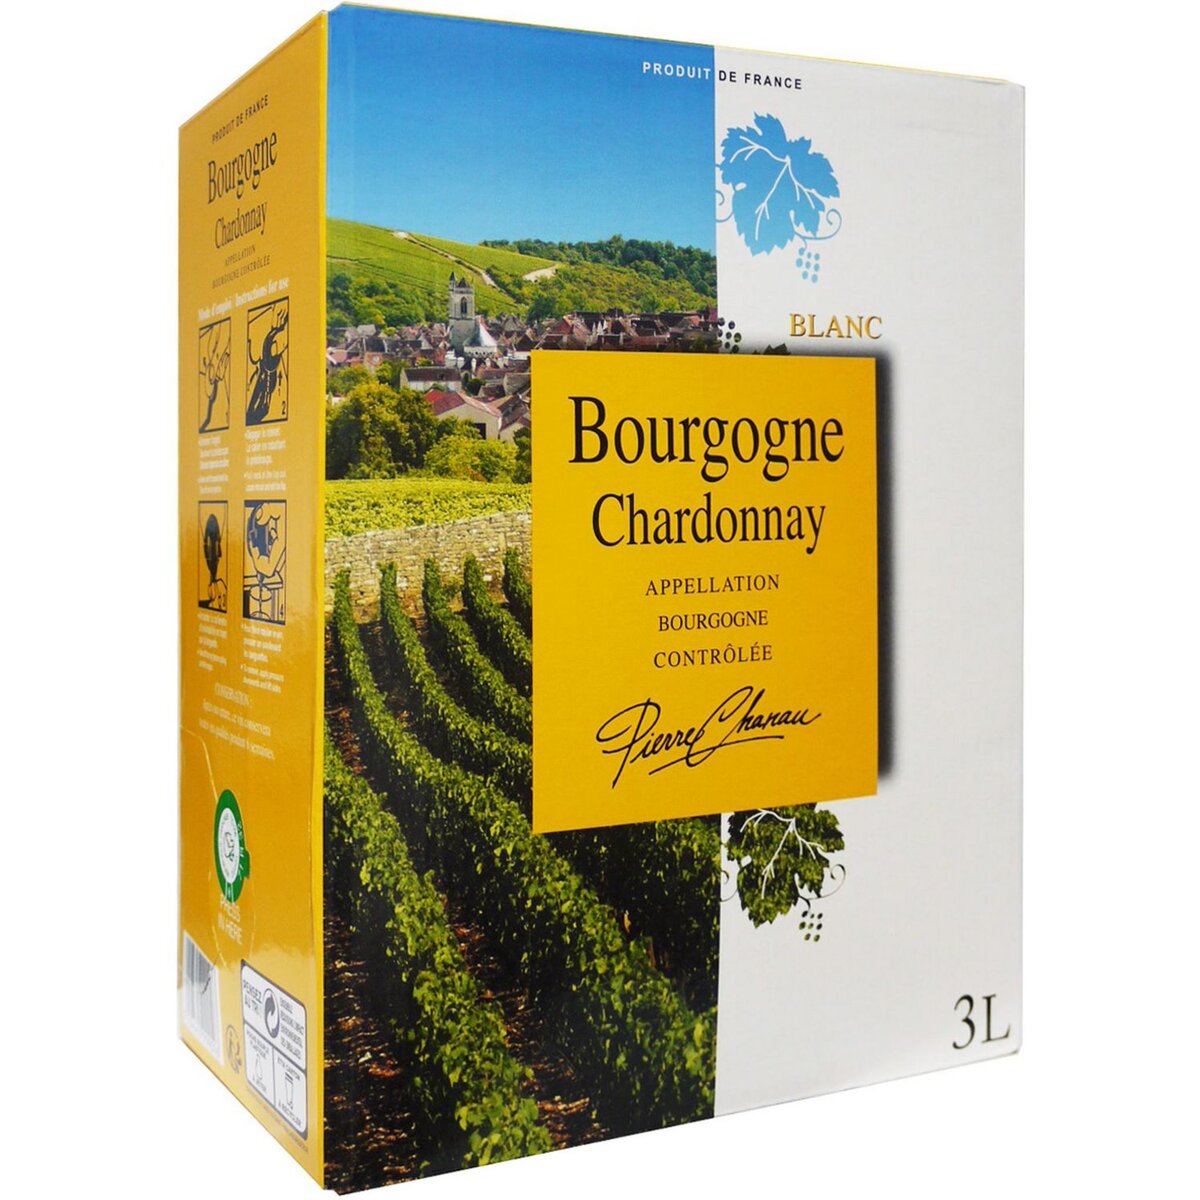 PIERRE CHANAU AOP Bourgogne chardonnay blanc bib Grand format 3L